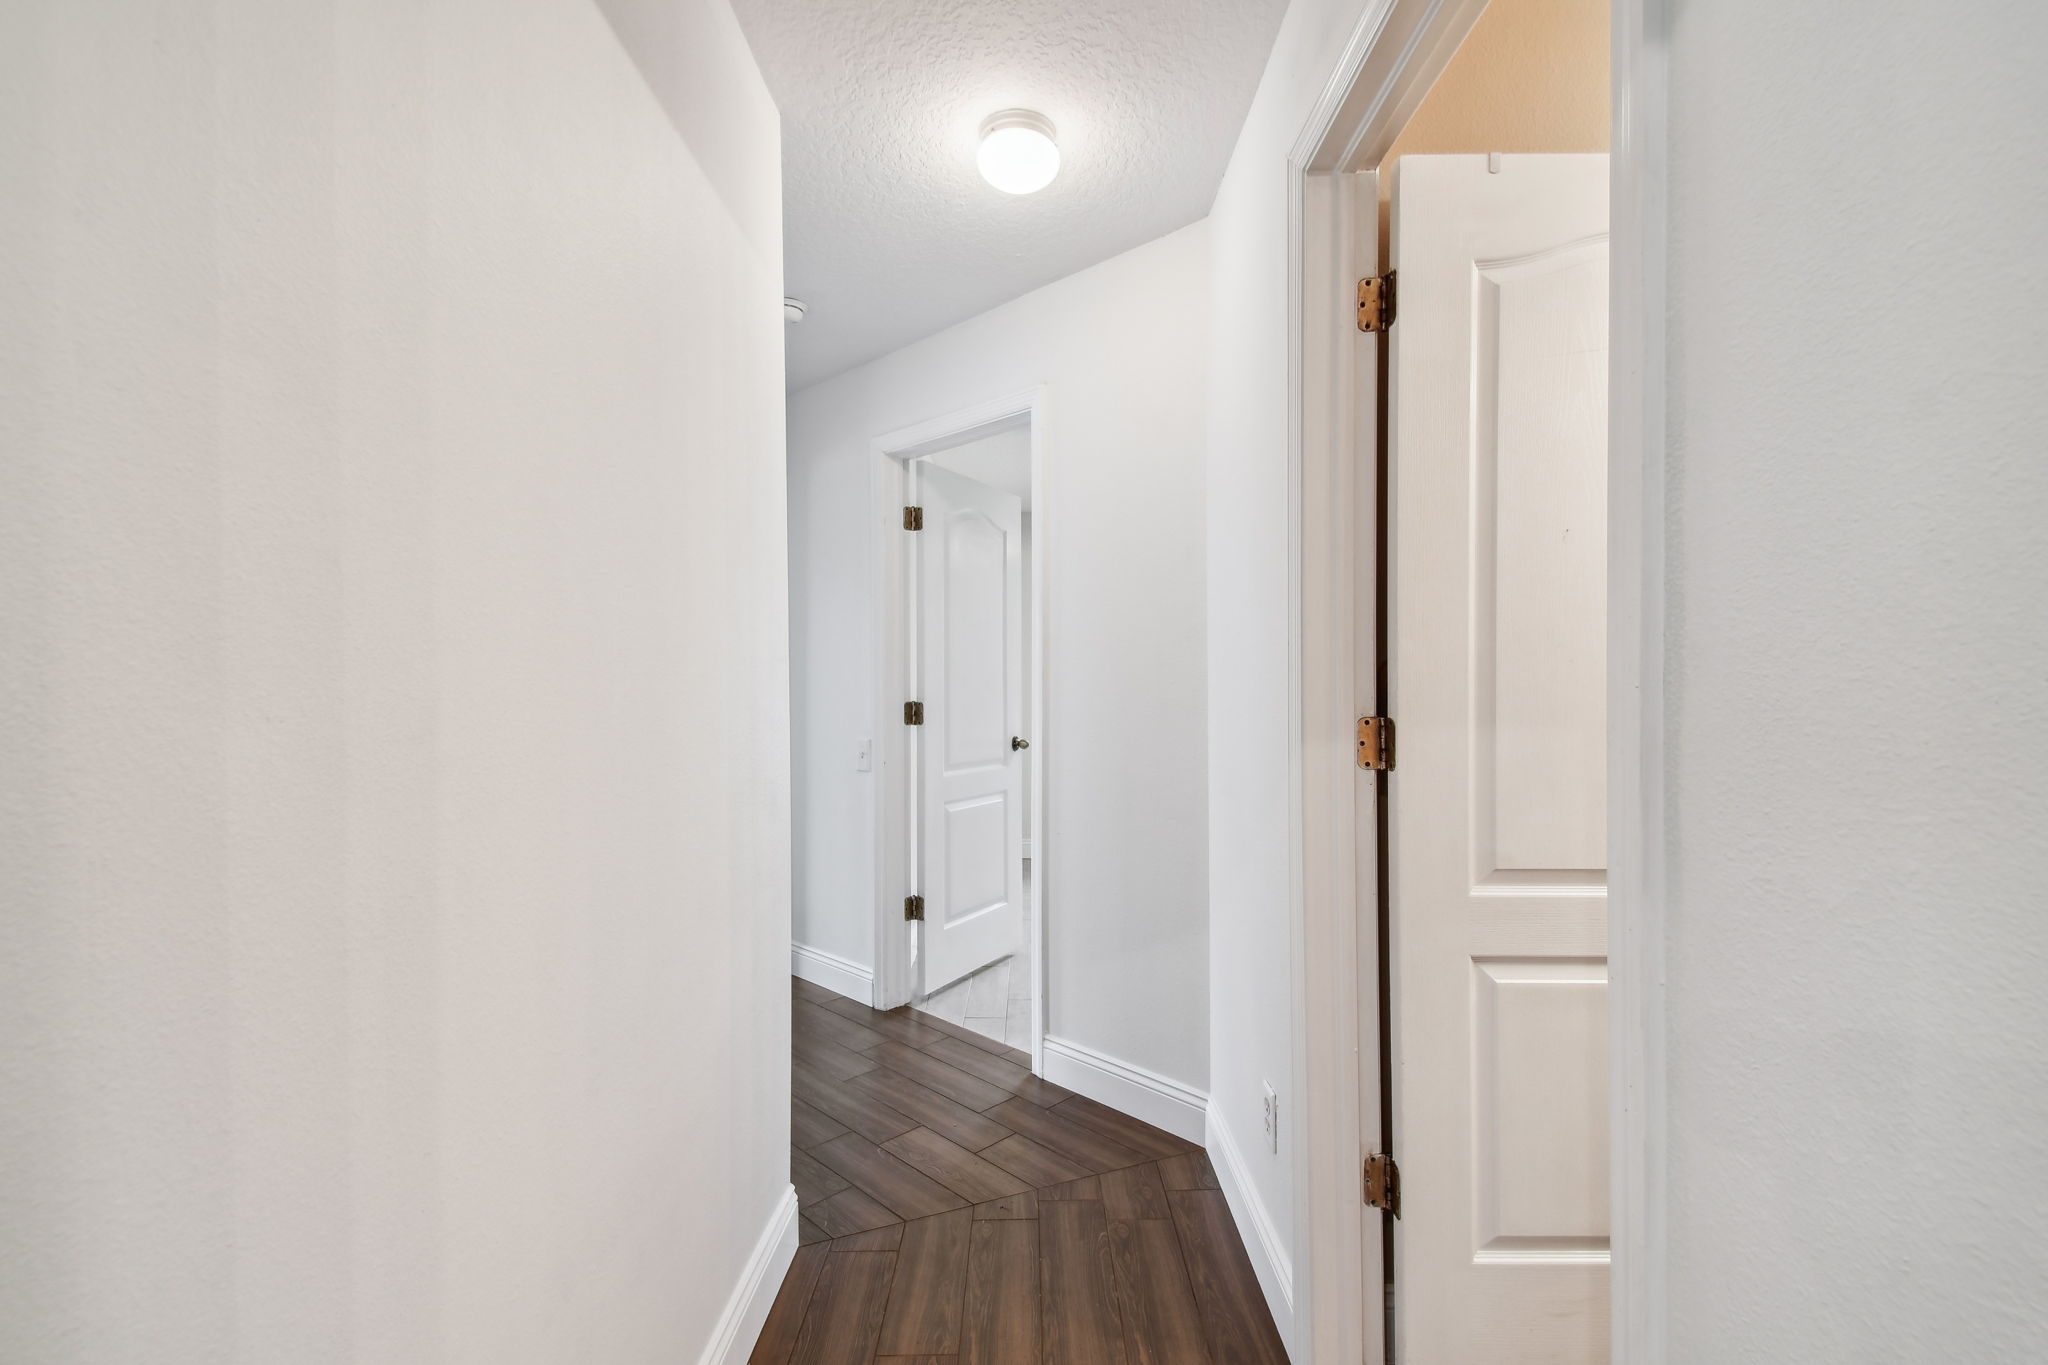 Hallway to Secondary Bedrooms